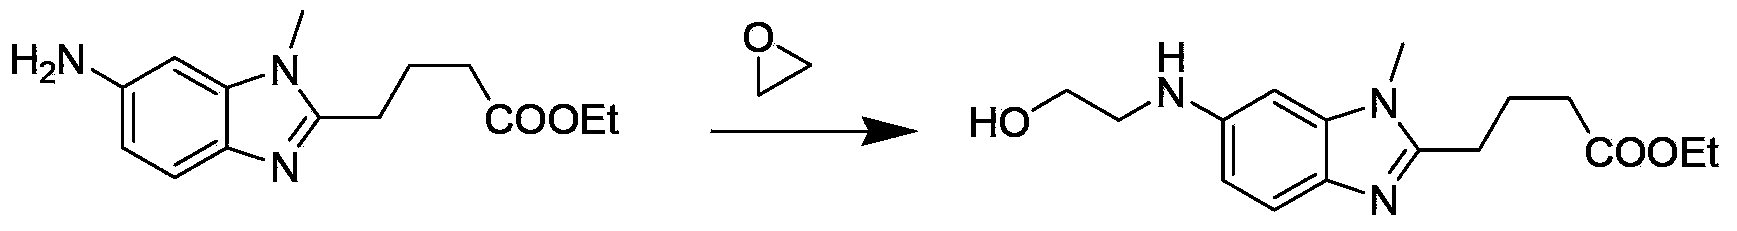 Preparation method of impurity HP1 in bendamustine hydrochloride